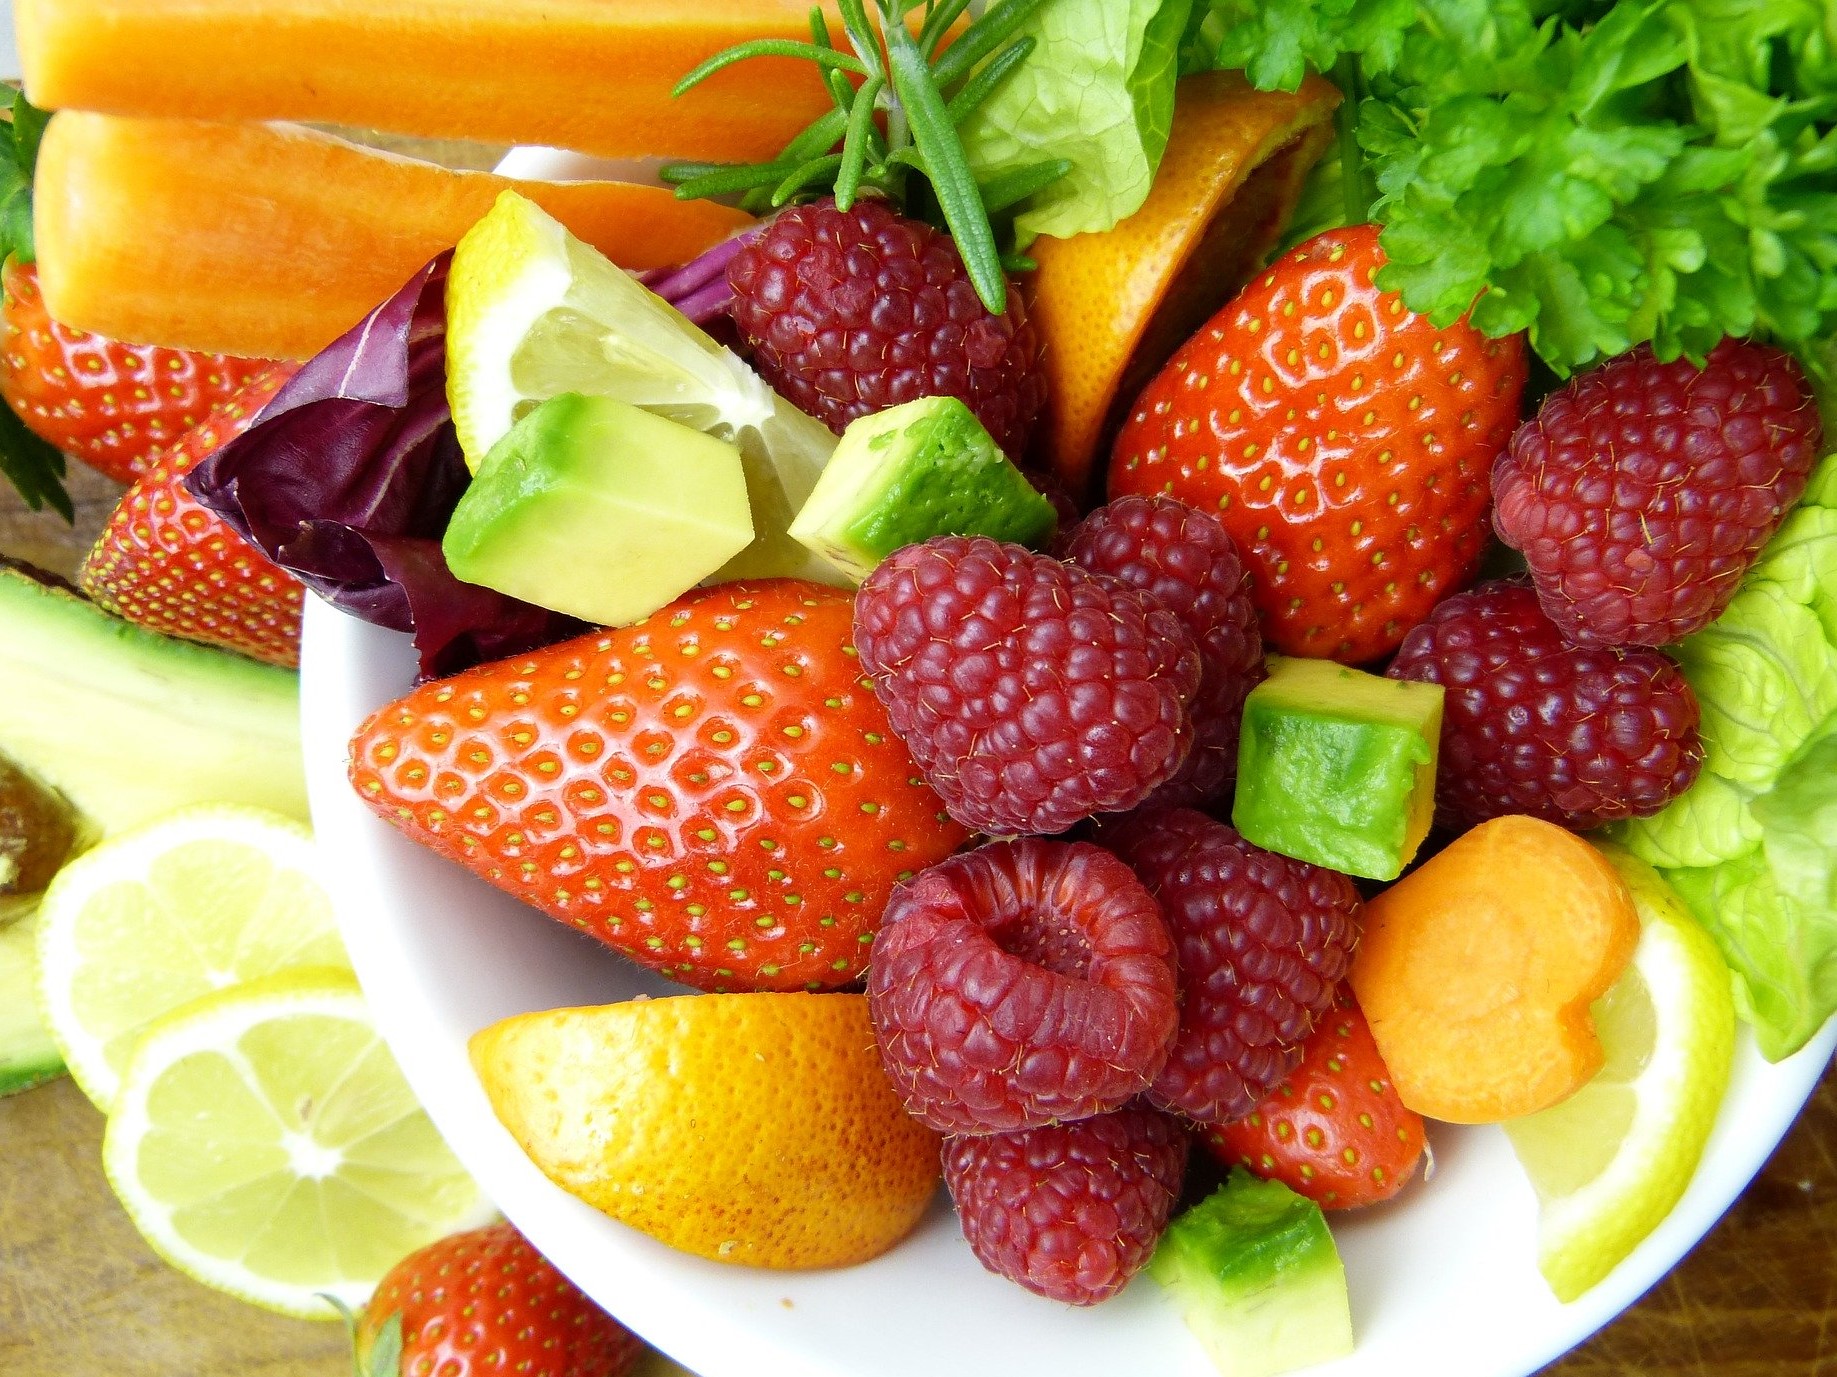 Fresh Produce, Fresh Fruit, Fresh Vegetables and Salads